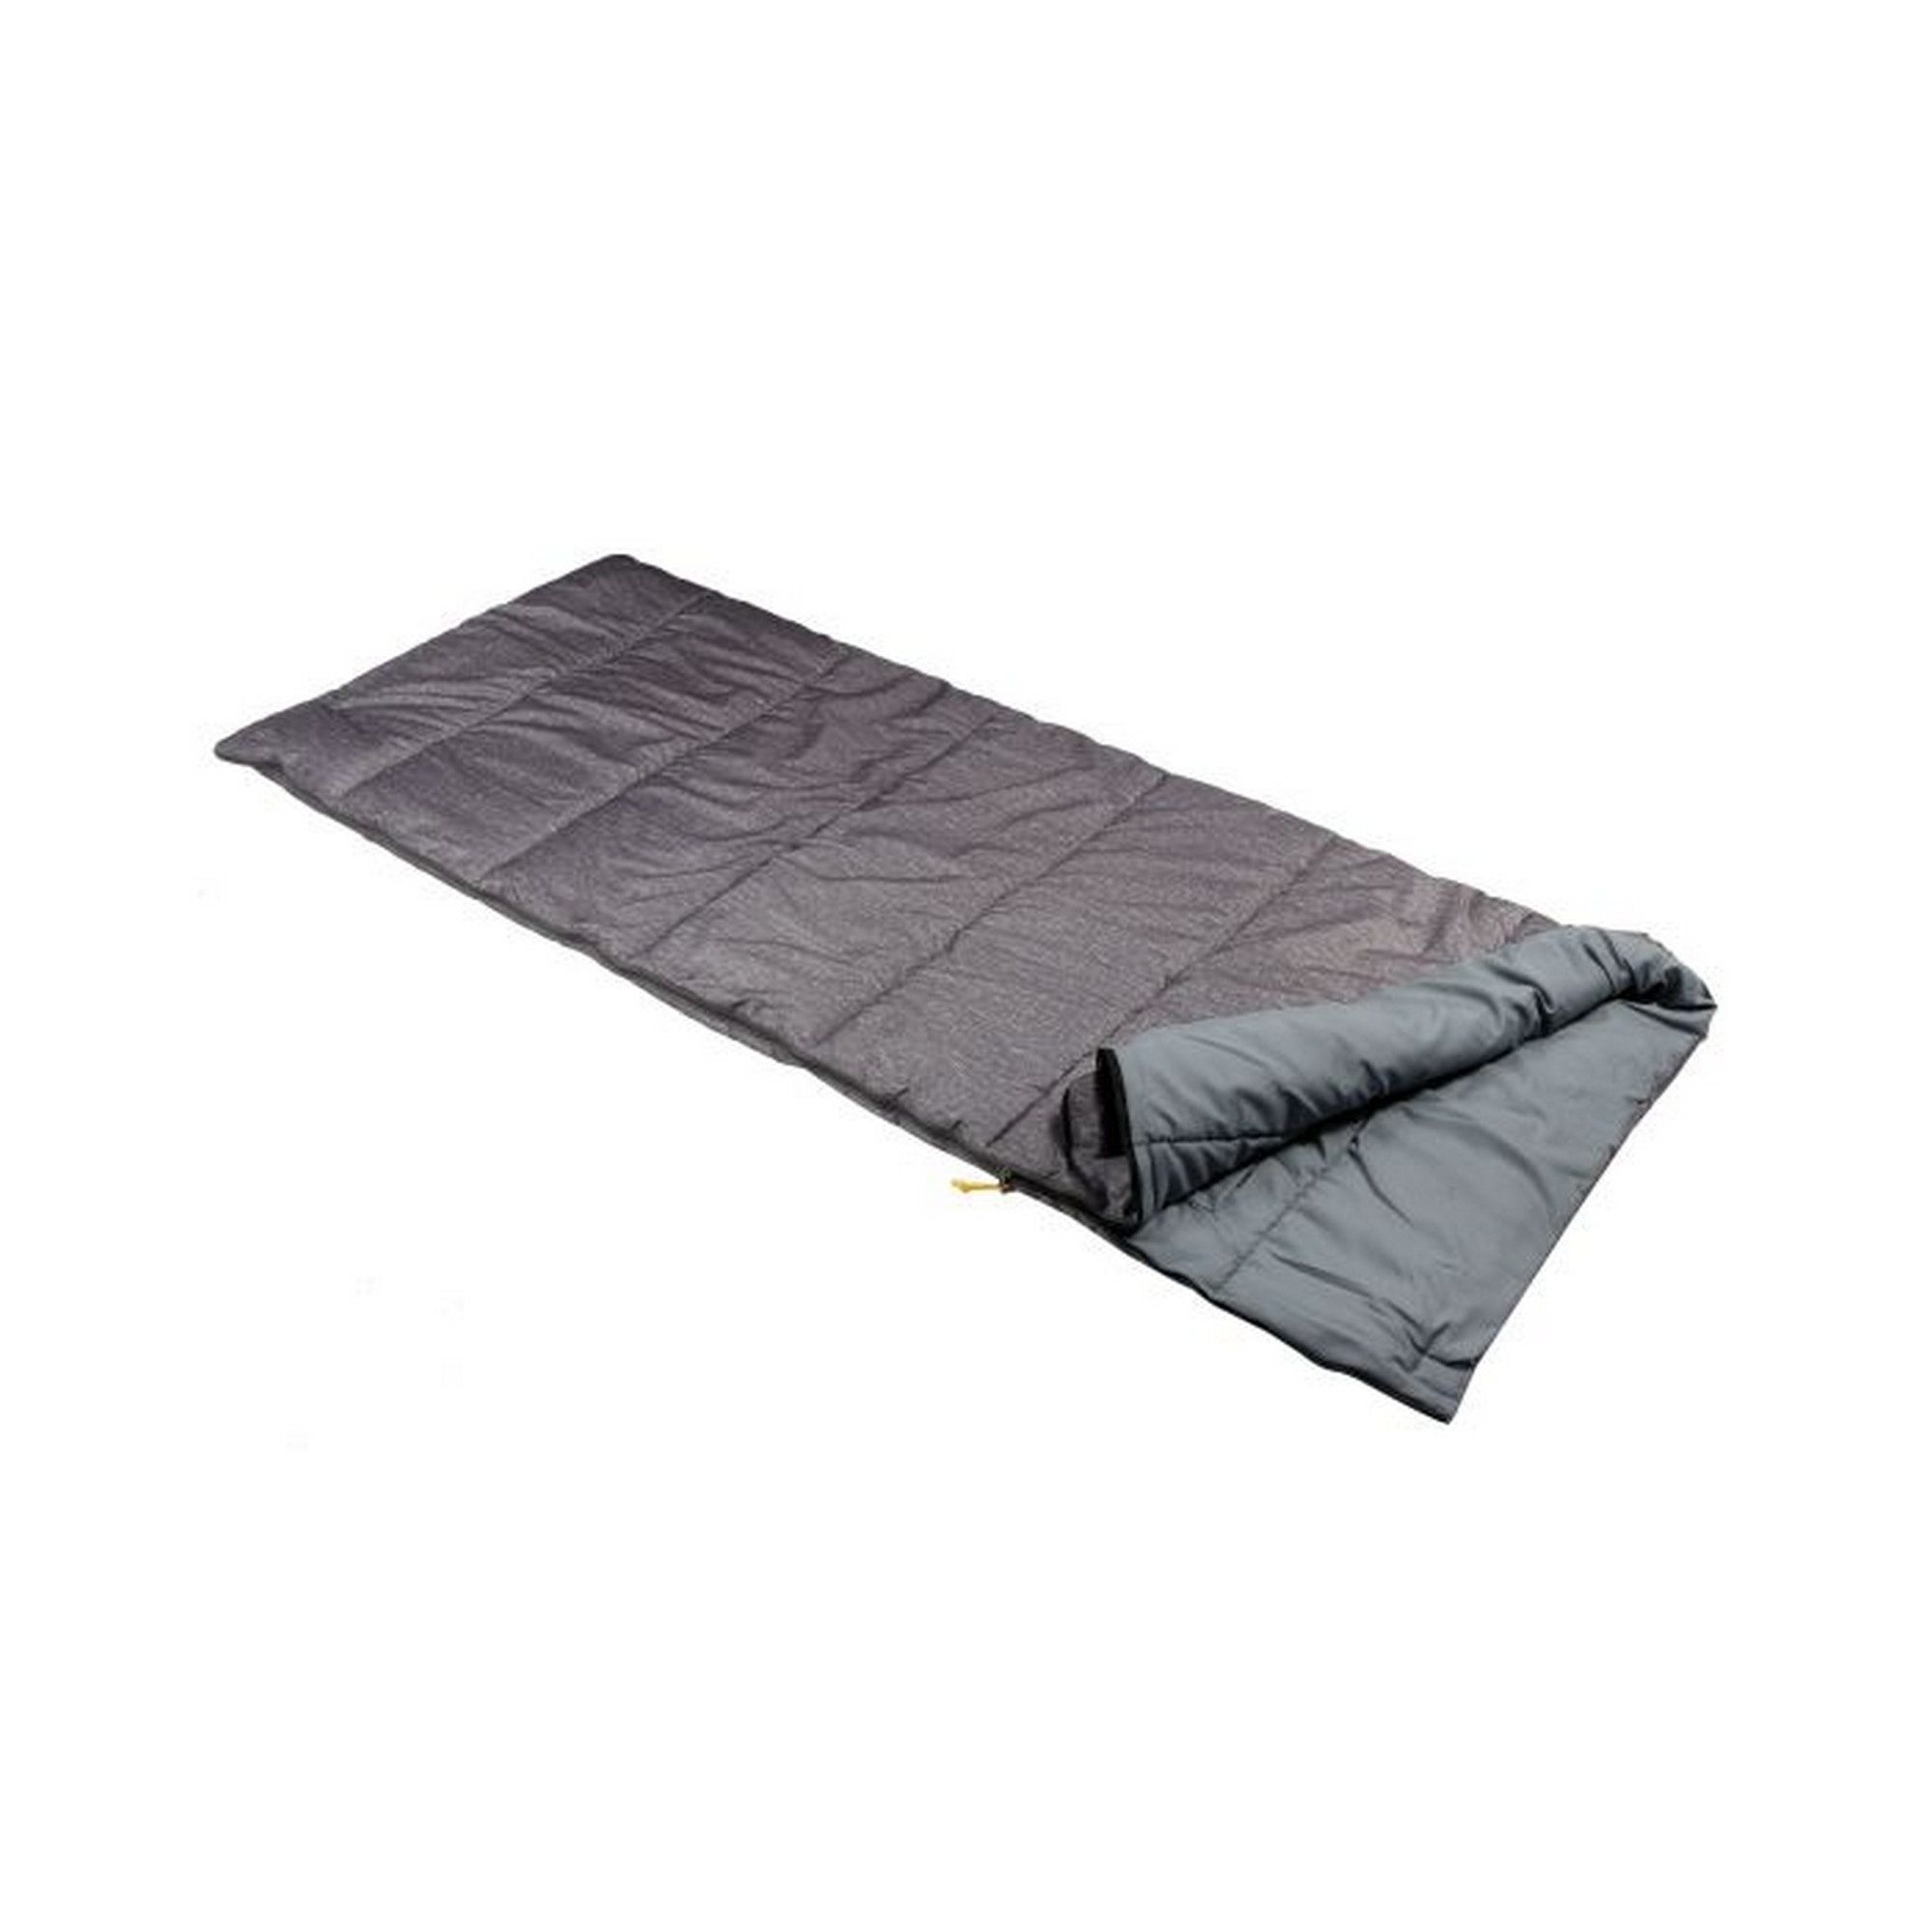 2 Season single rectangular sleeping bag. 100% Polyester.